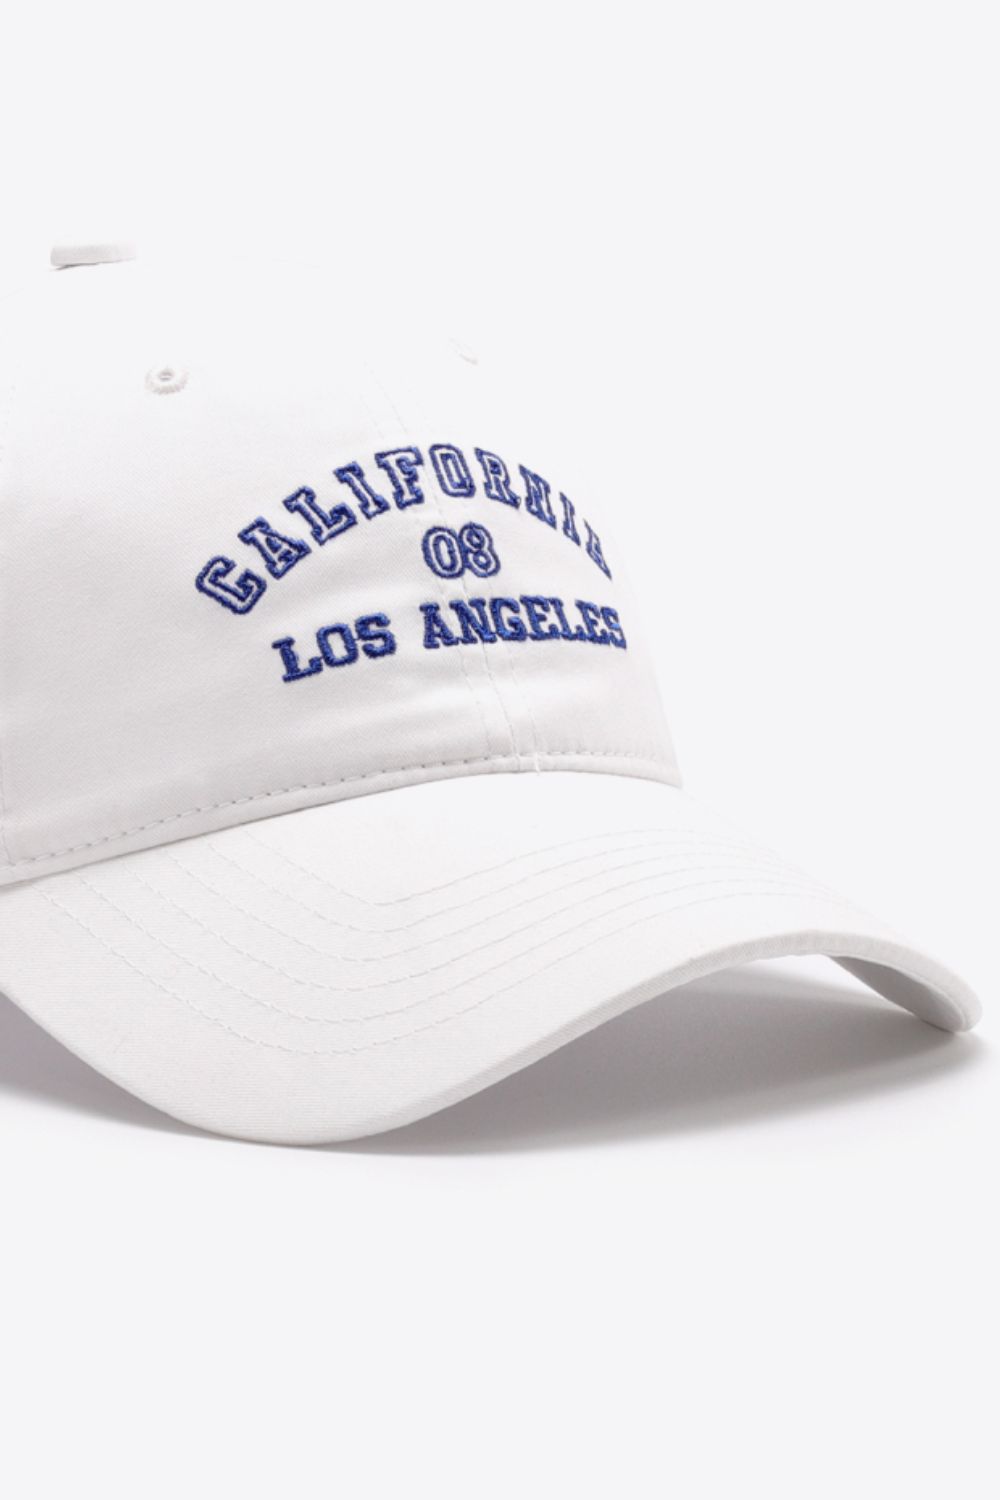 CALIFORNIA LOS ANGELES Adjustable Baseball Cap BLUE ZONE PLANET